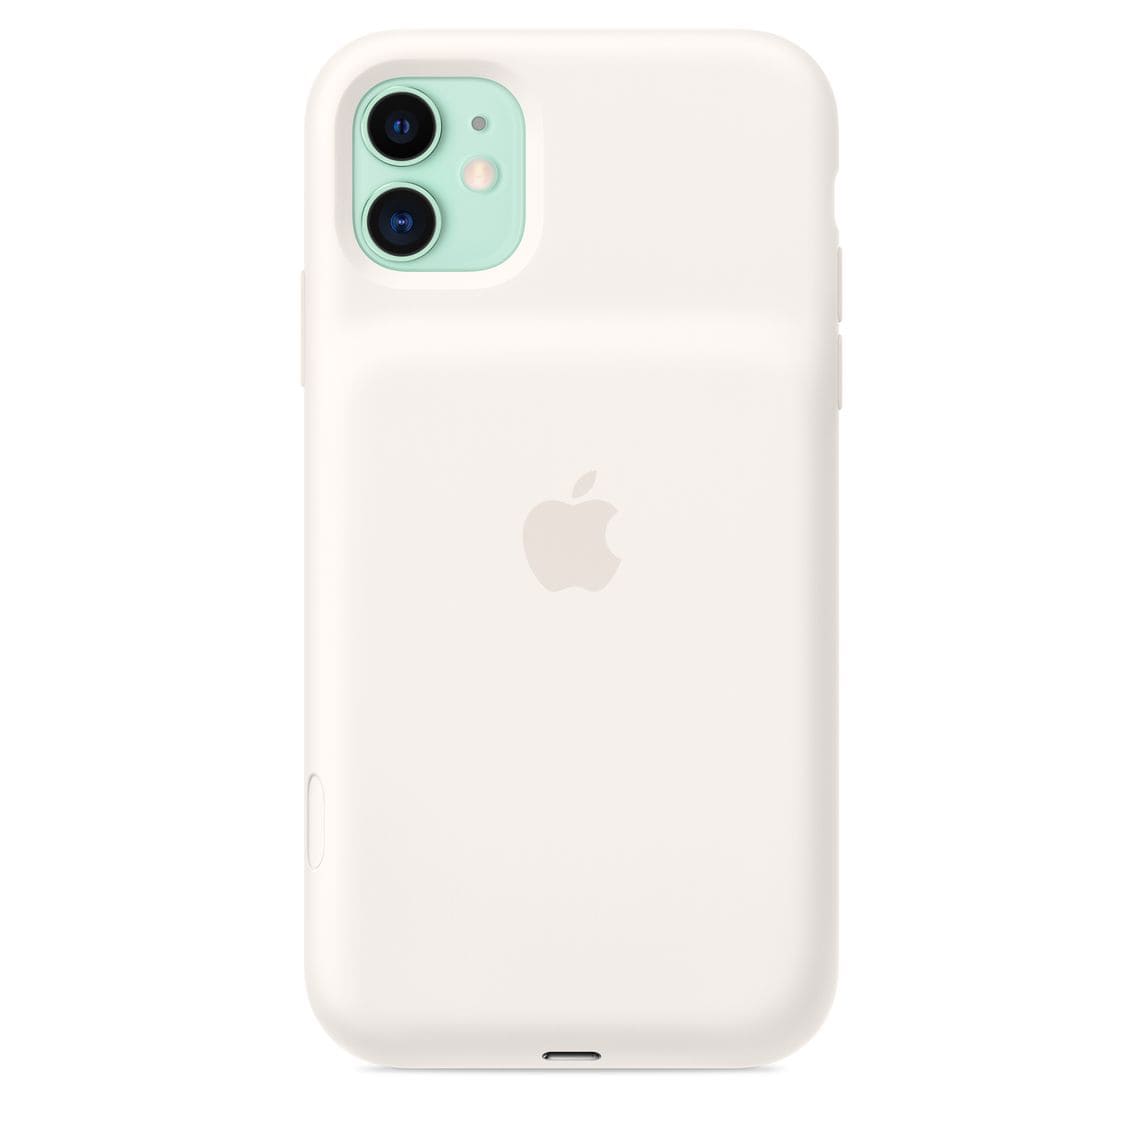 Фото — Чехол для смартфона Apple Smart Battery Case для iPhone 11, белый